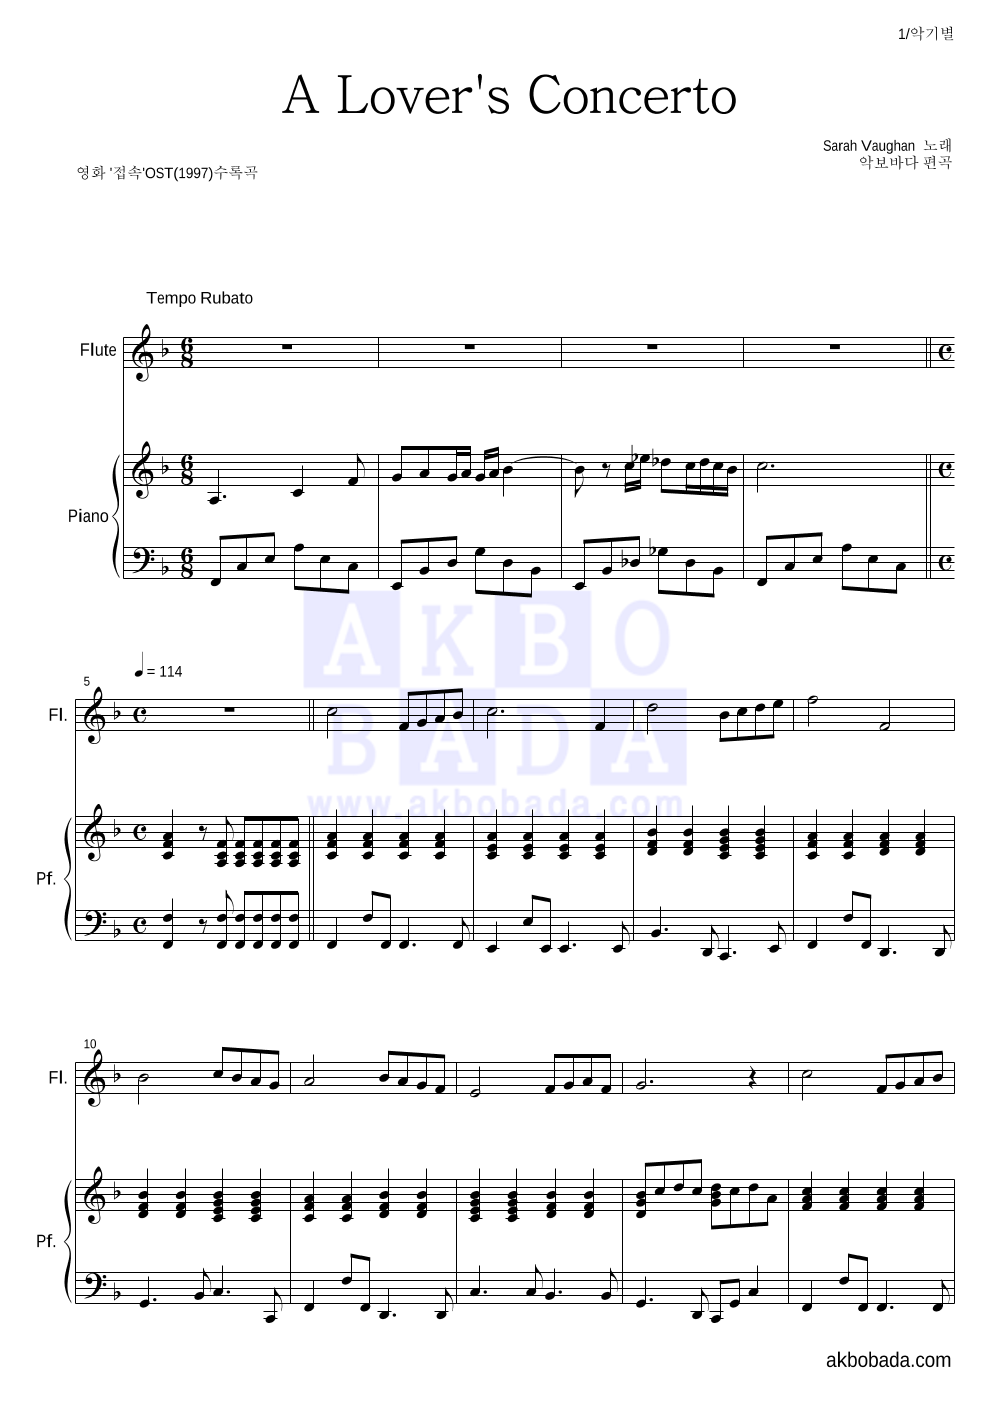 Sarah Vaughan - A Lover's Concerto 플룻&피아노 악보 